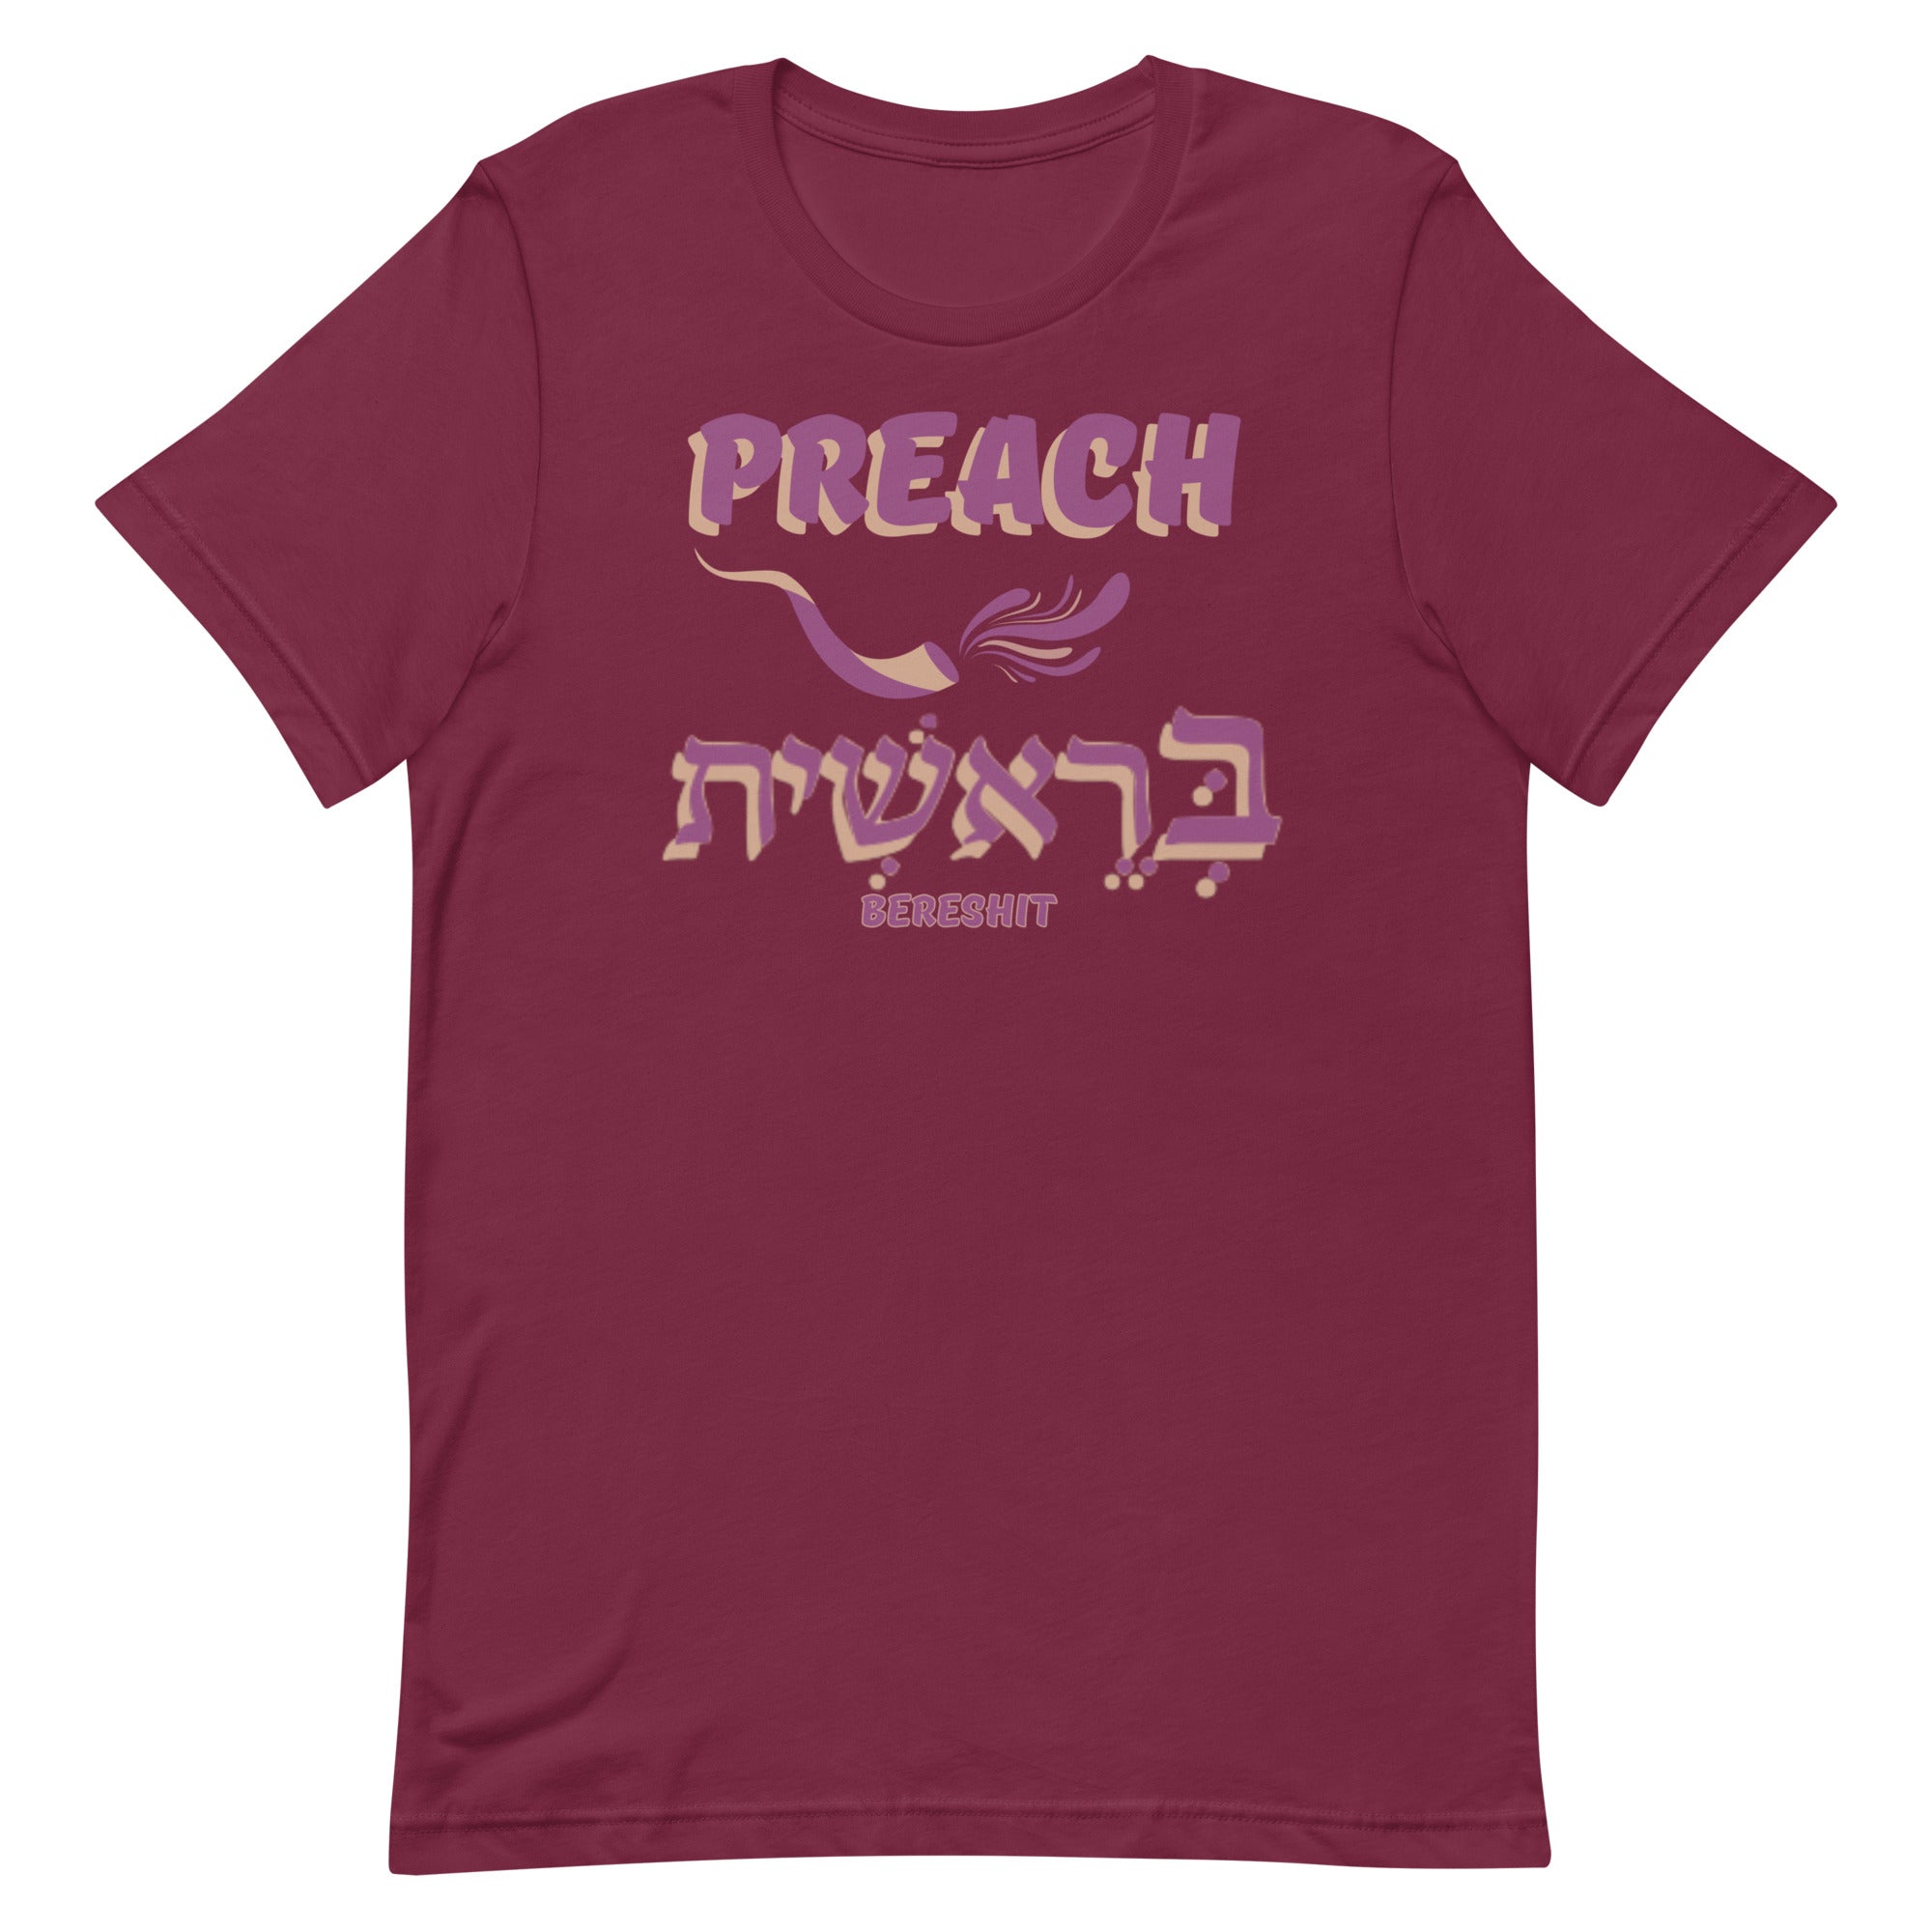 Preach Bereshit Unisex t-shirt